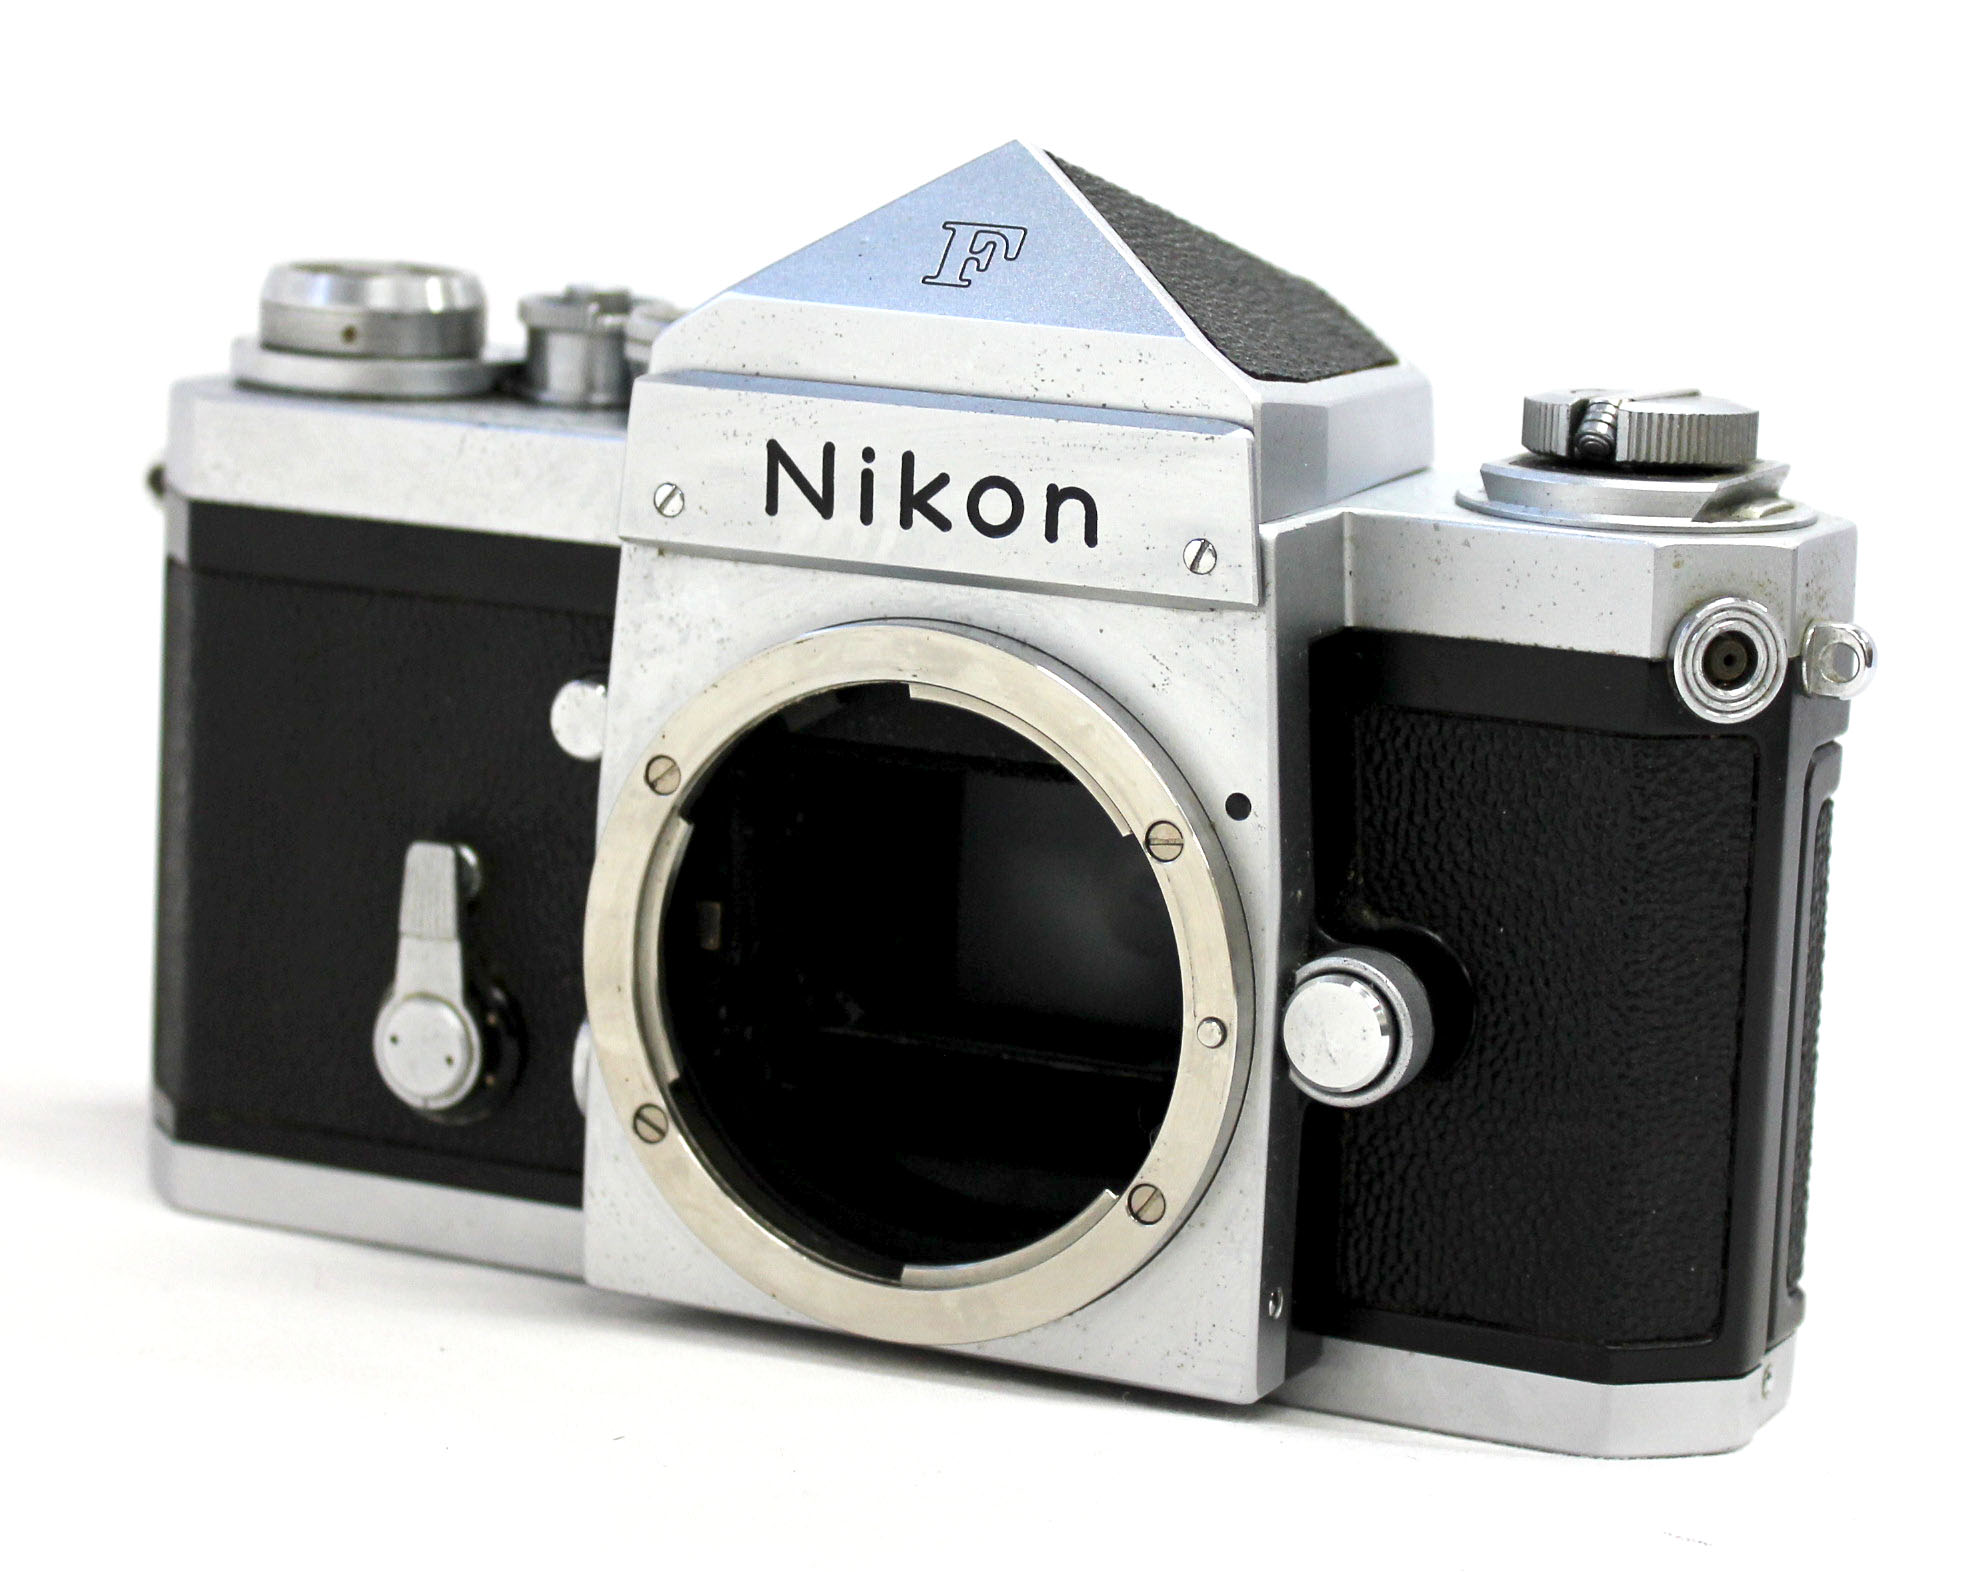  Nikon F Eye Level 35mm SLR Film Camera from Japan Photo 0